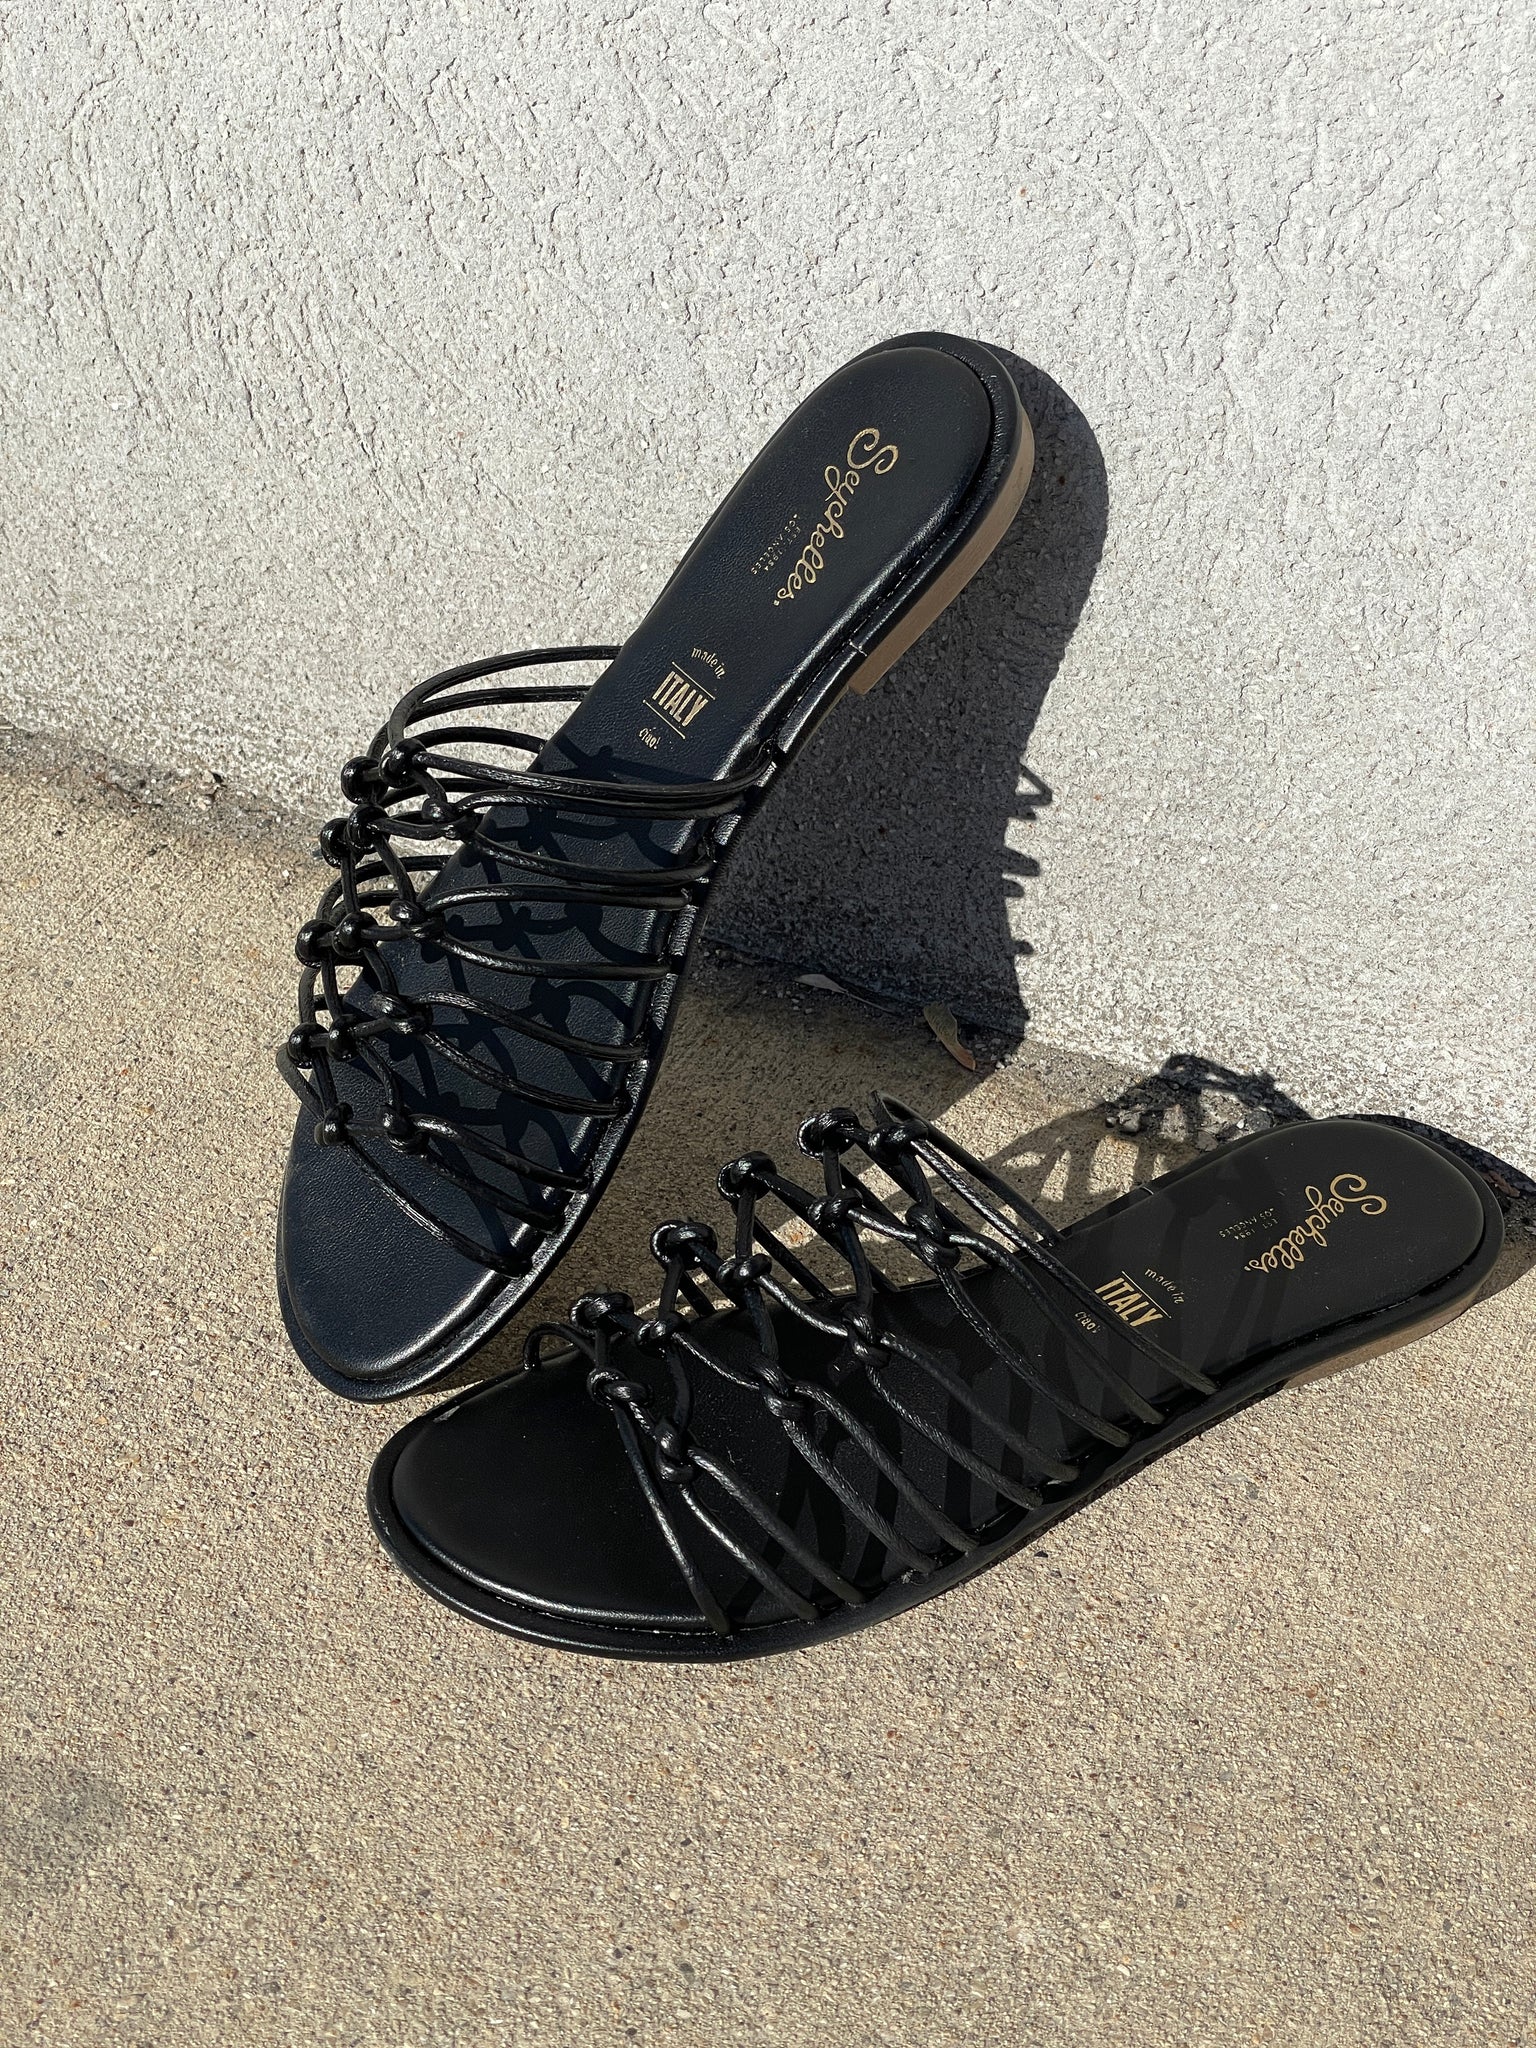 The Mykonos Sandals